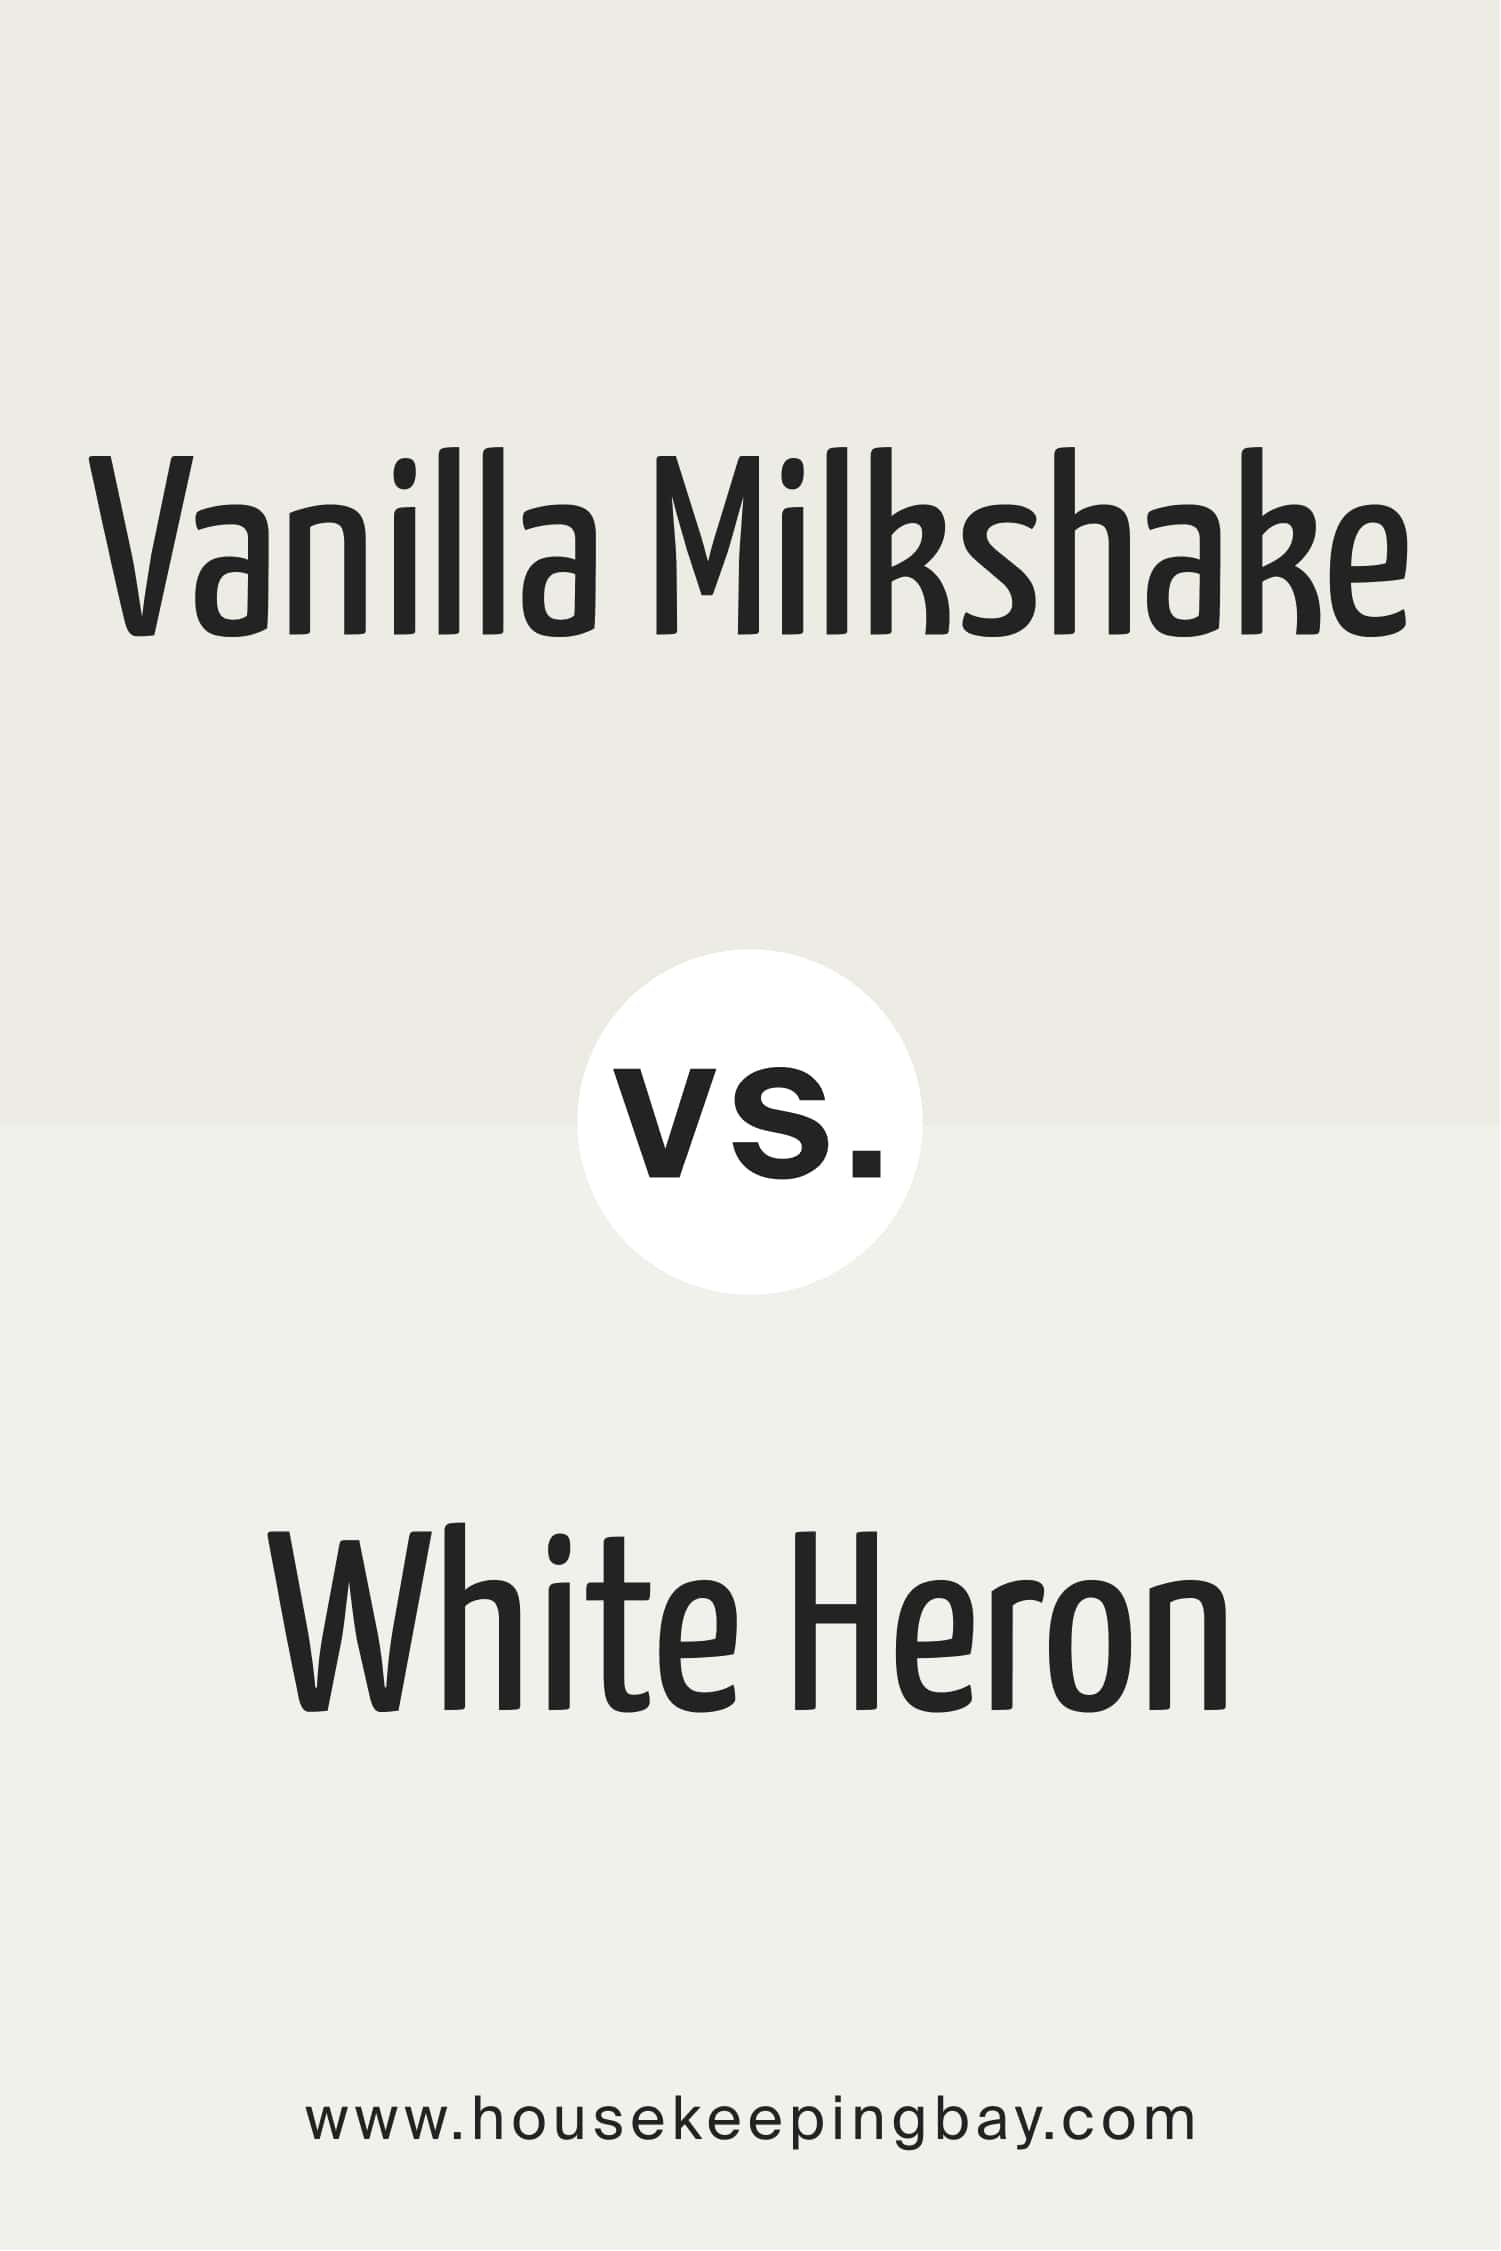 Vanilla Milkshake vs White Heron